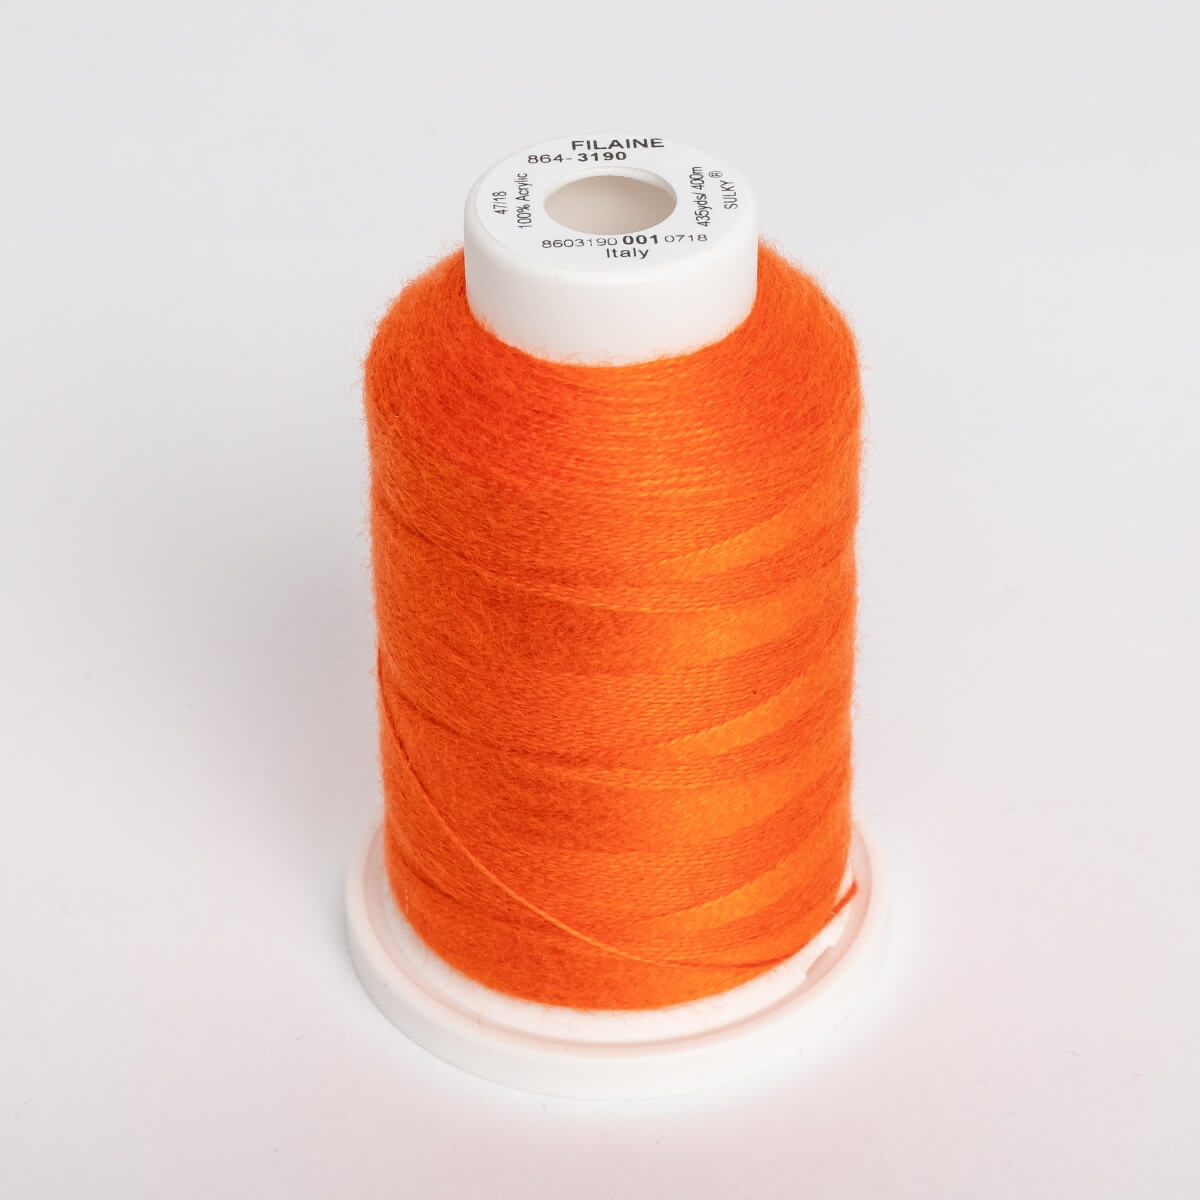 SULKY FILAINE 12, 400m Maxi Spulen - Farbe 3190 Tangerine